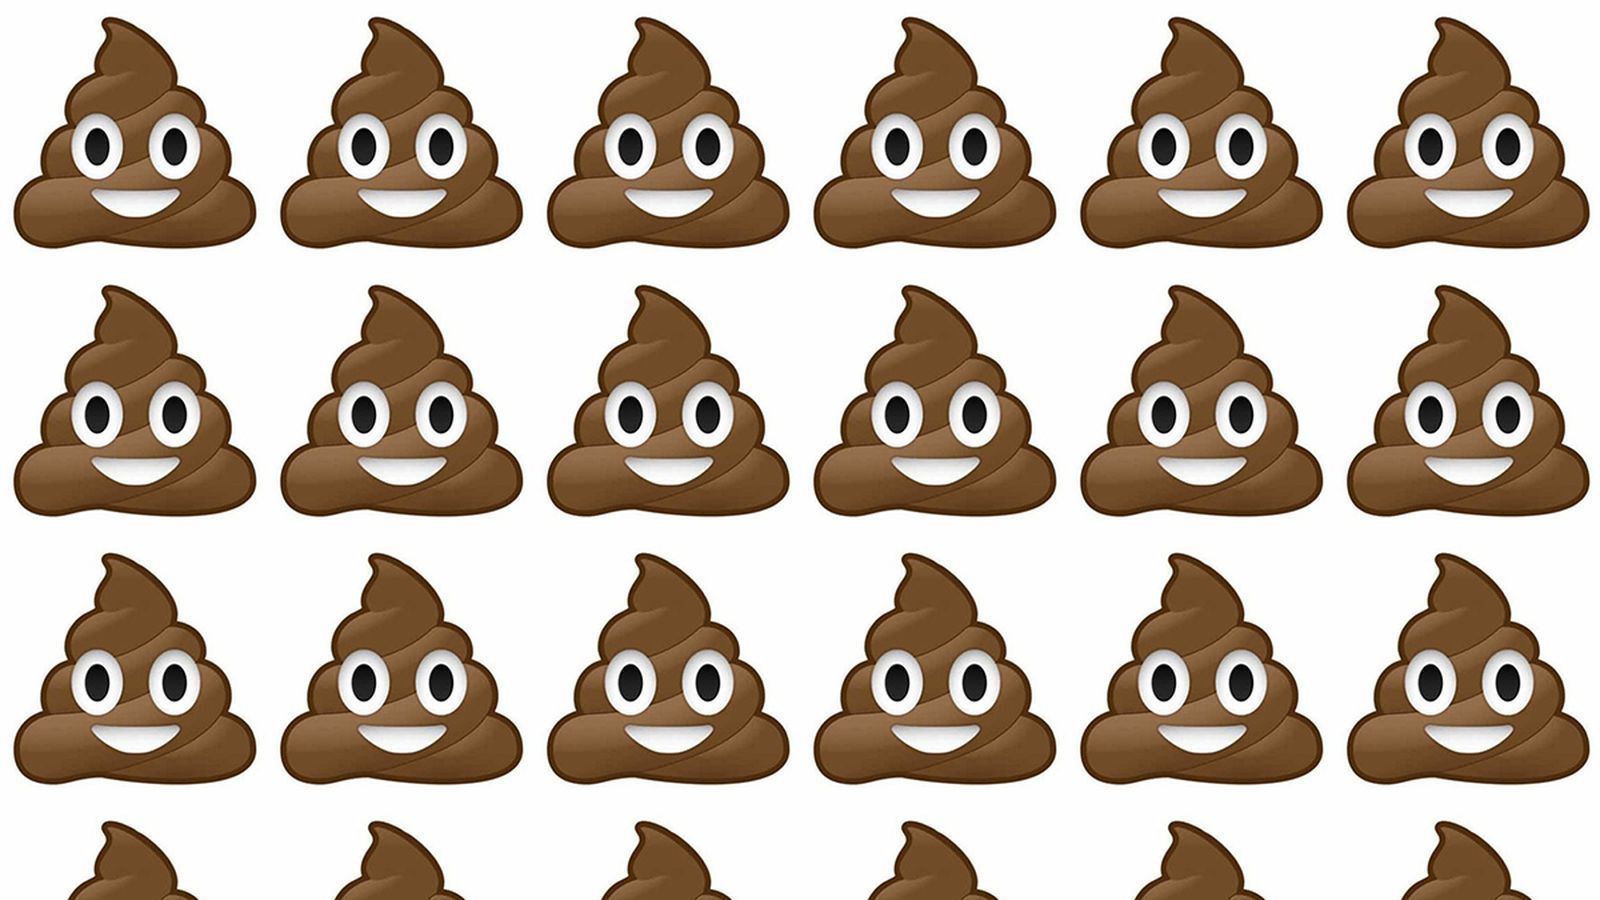 Poop Wallpaper. Poop Emoji Wallpaper, Unicorn Poop Wallpaper and Poop Emoticon Wallpaper